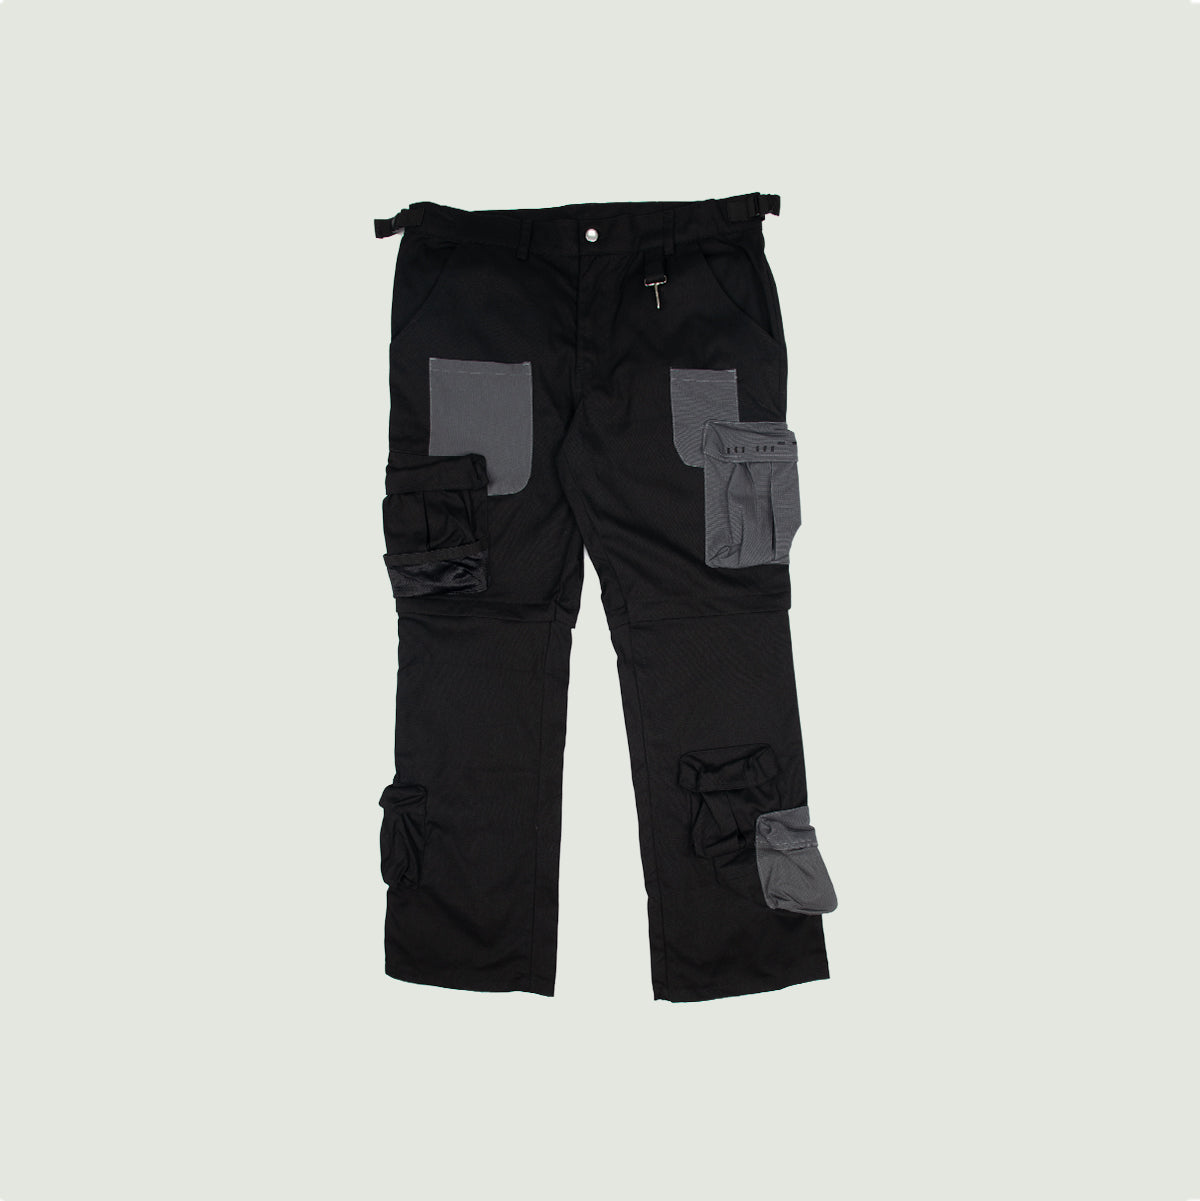 Militia Black cargo pants